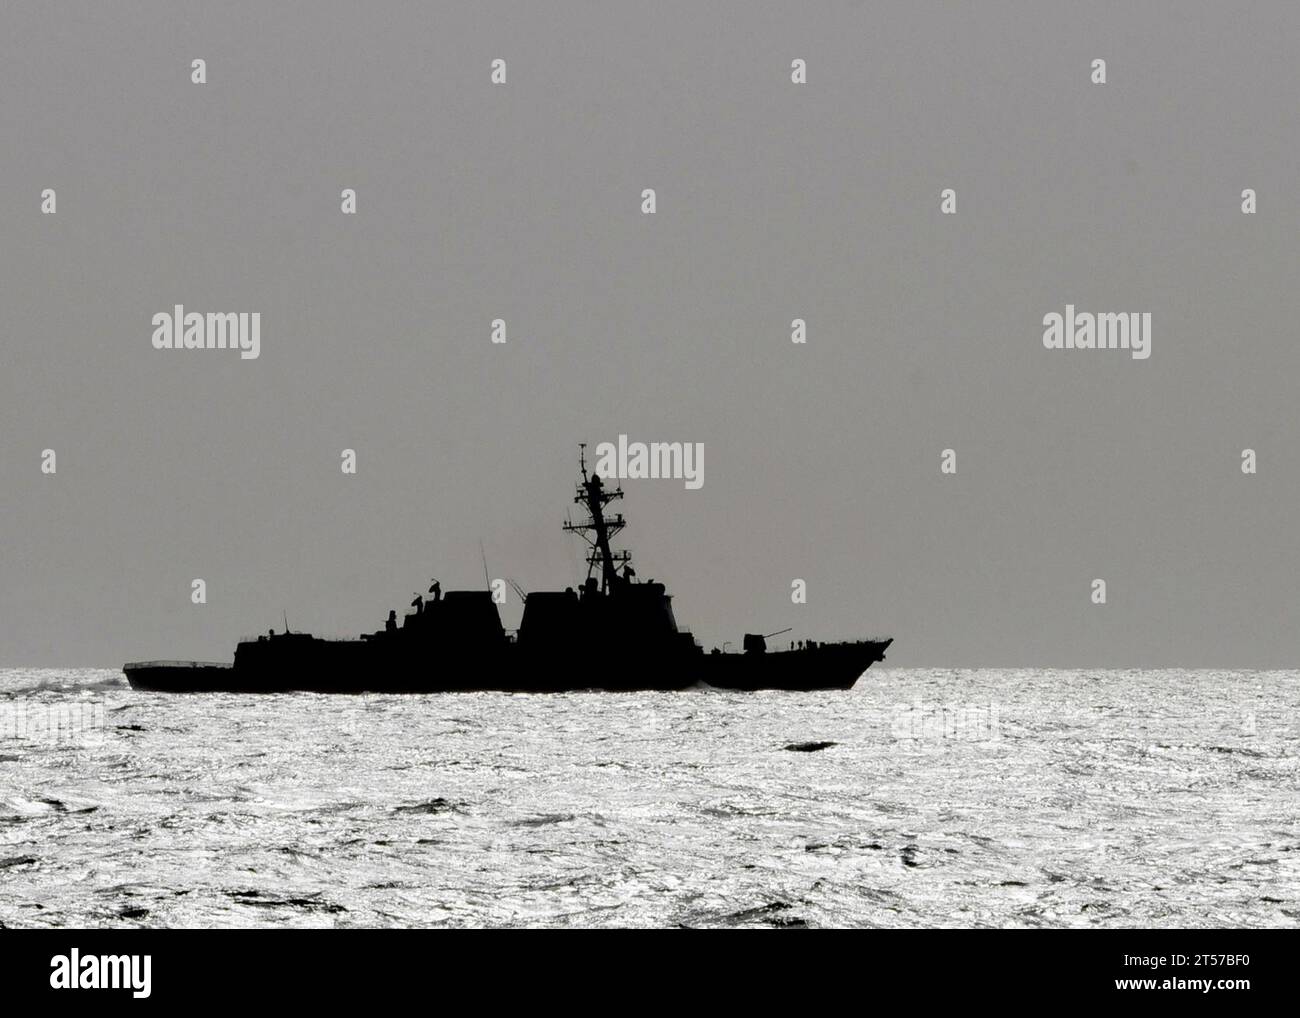 US Navy The Arleigh Burke-Class Destroyer USS Momsen (DDG 92) transits through the Arabian Sea.jpg Stock Photo